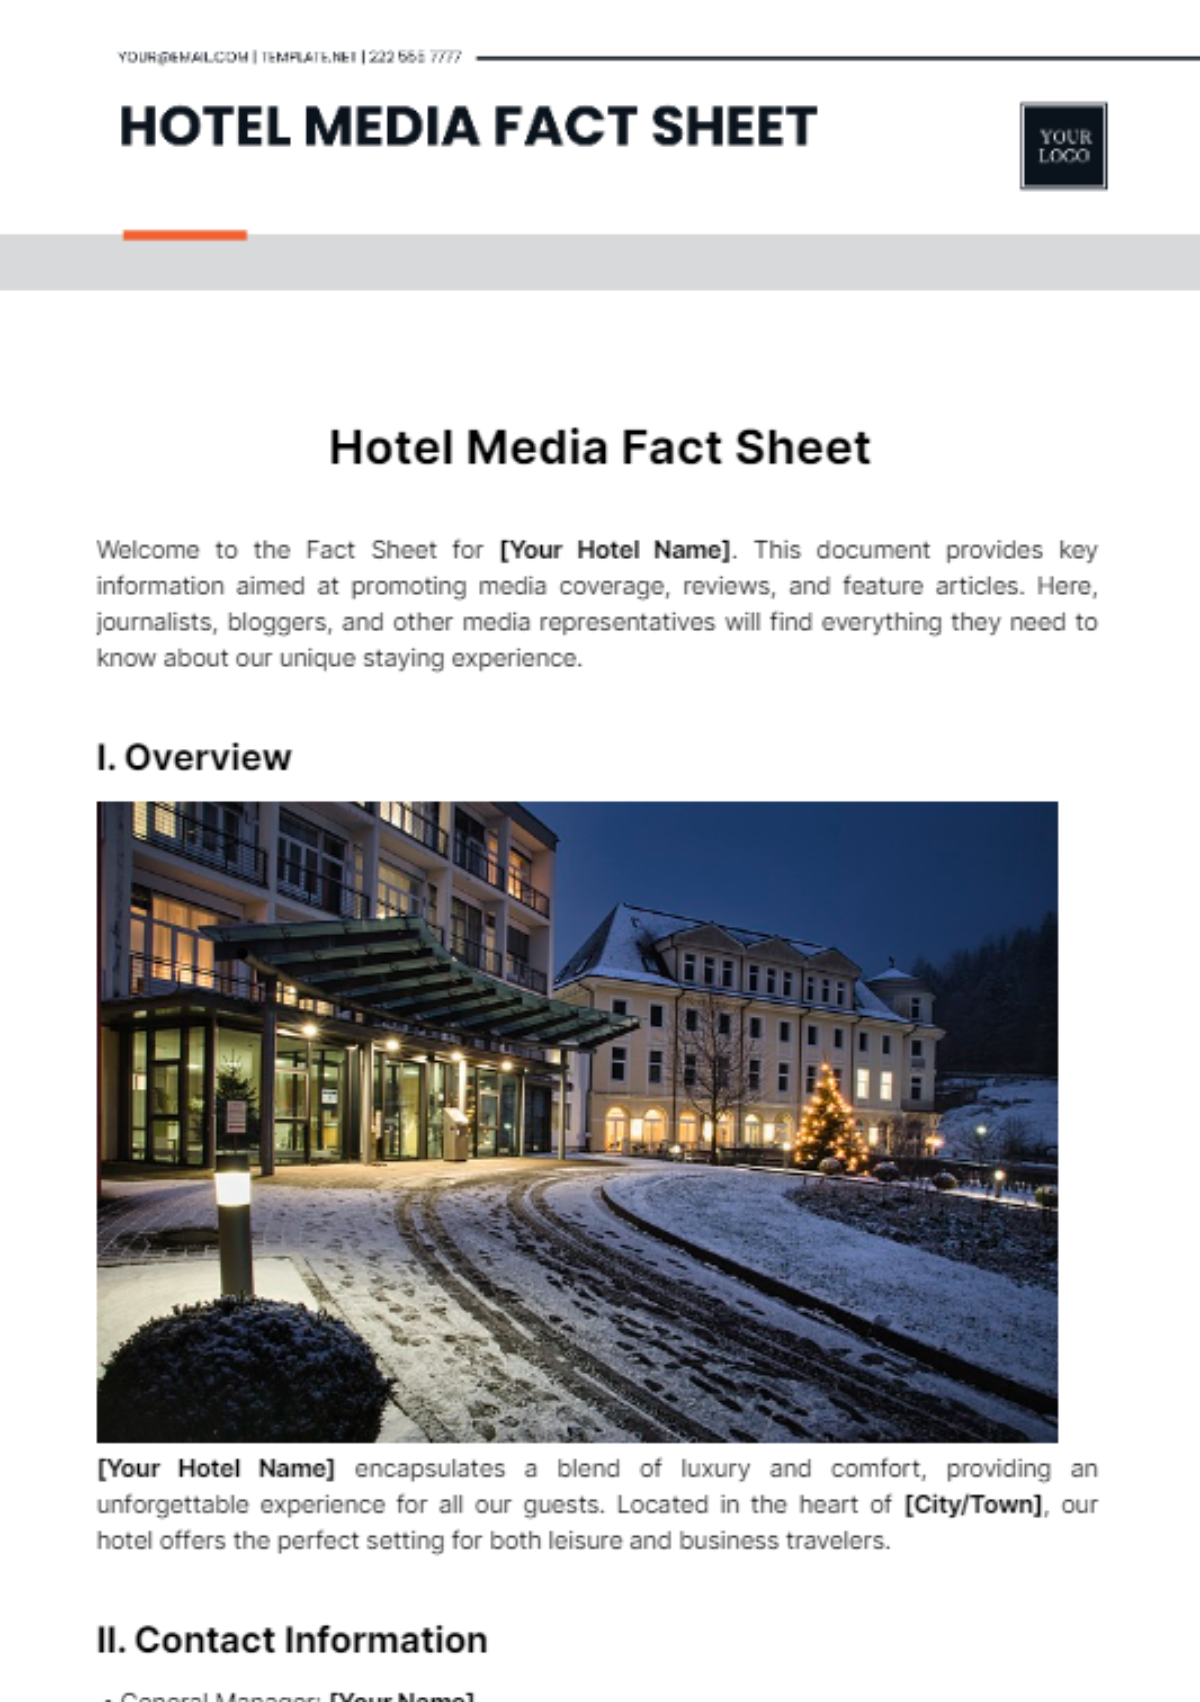 Hotel Media Fact Sheet Template